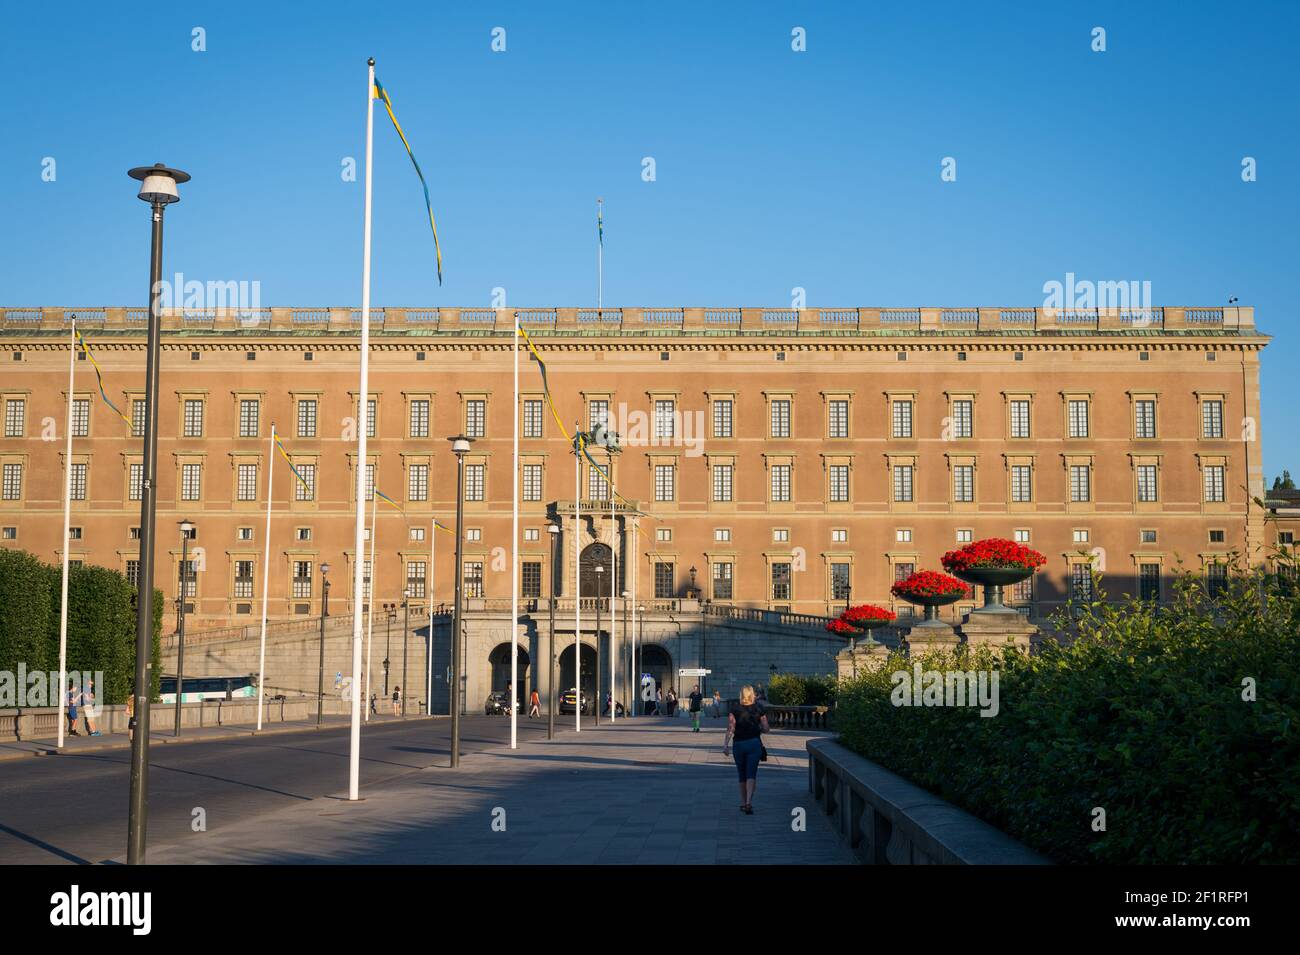 Stockholm Royal Palace (Kungliga slottet), Gamla Stan, Stockholm, Sweden. Stock Photo